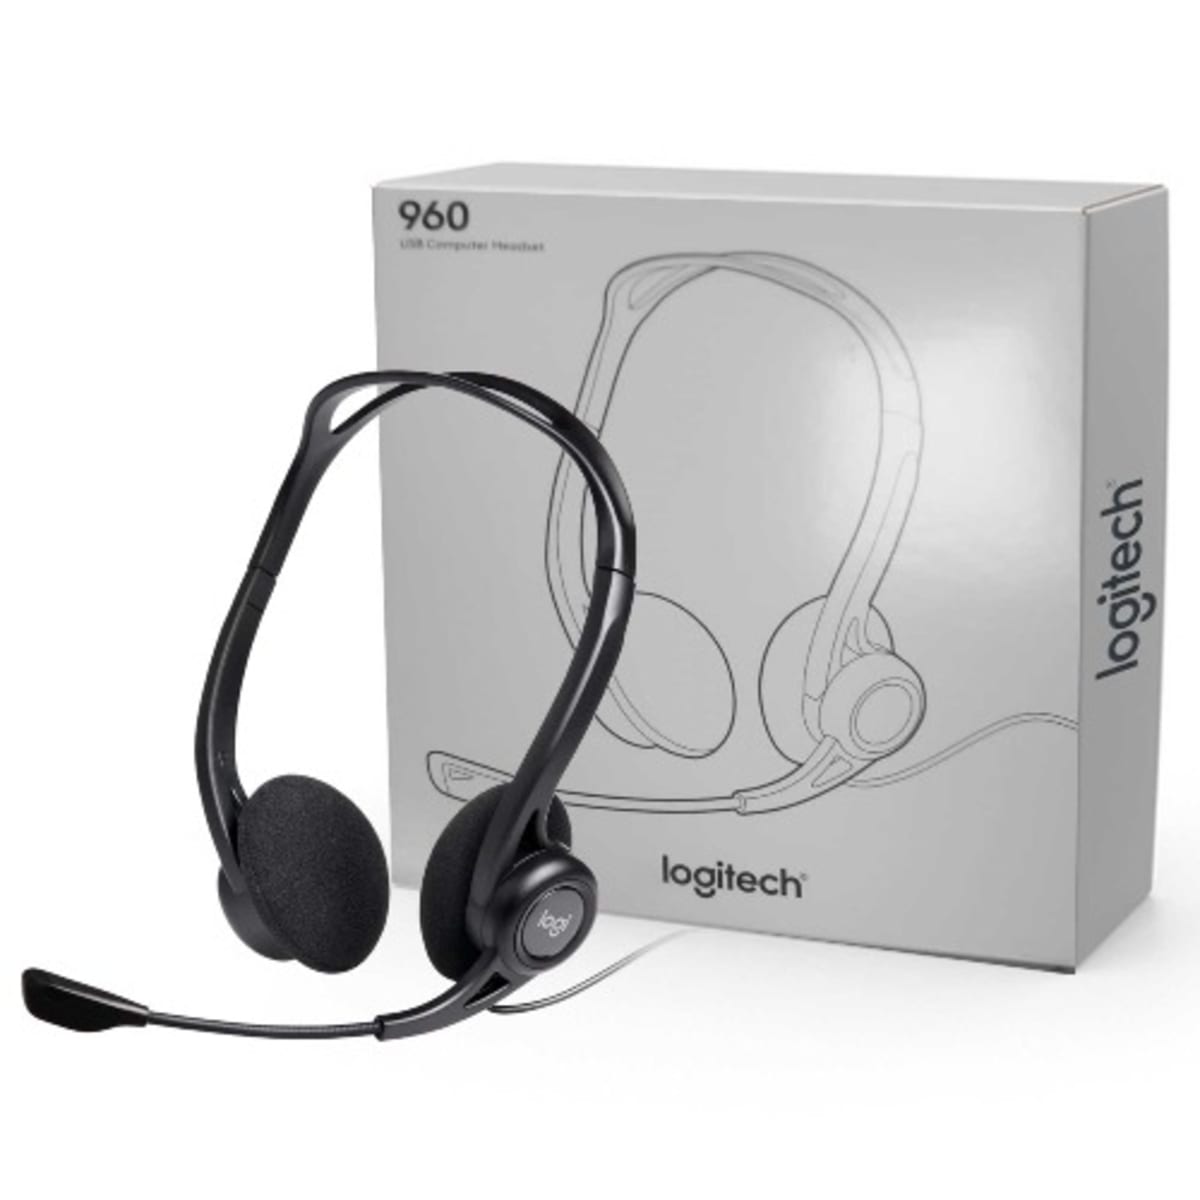 Pc | Konga USB Logitech 960 Shopping Headset Online